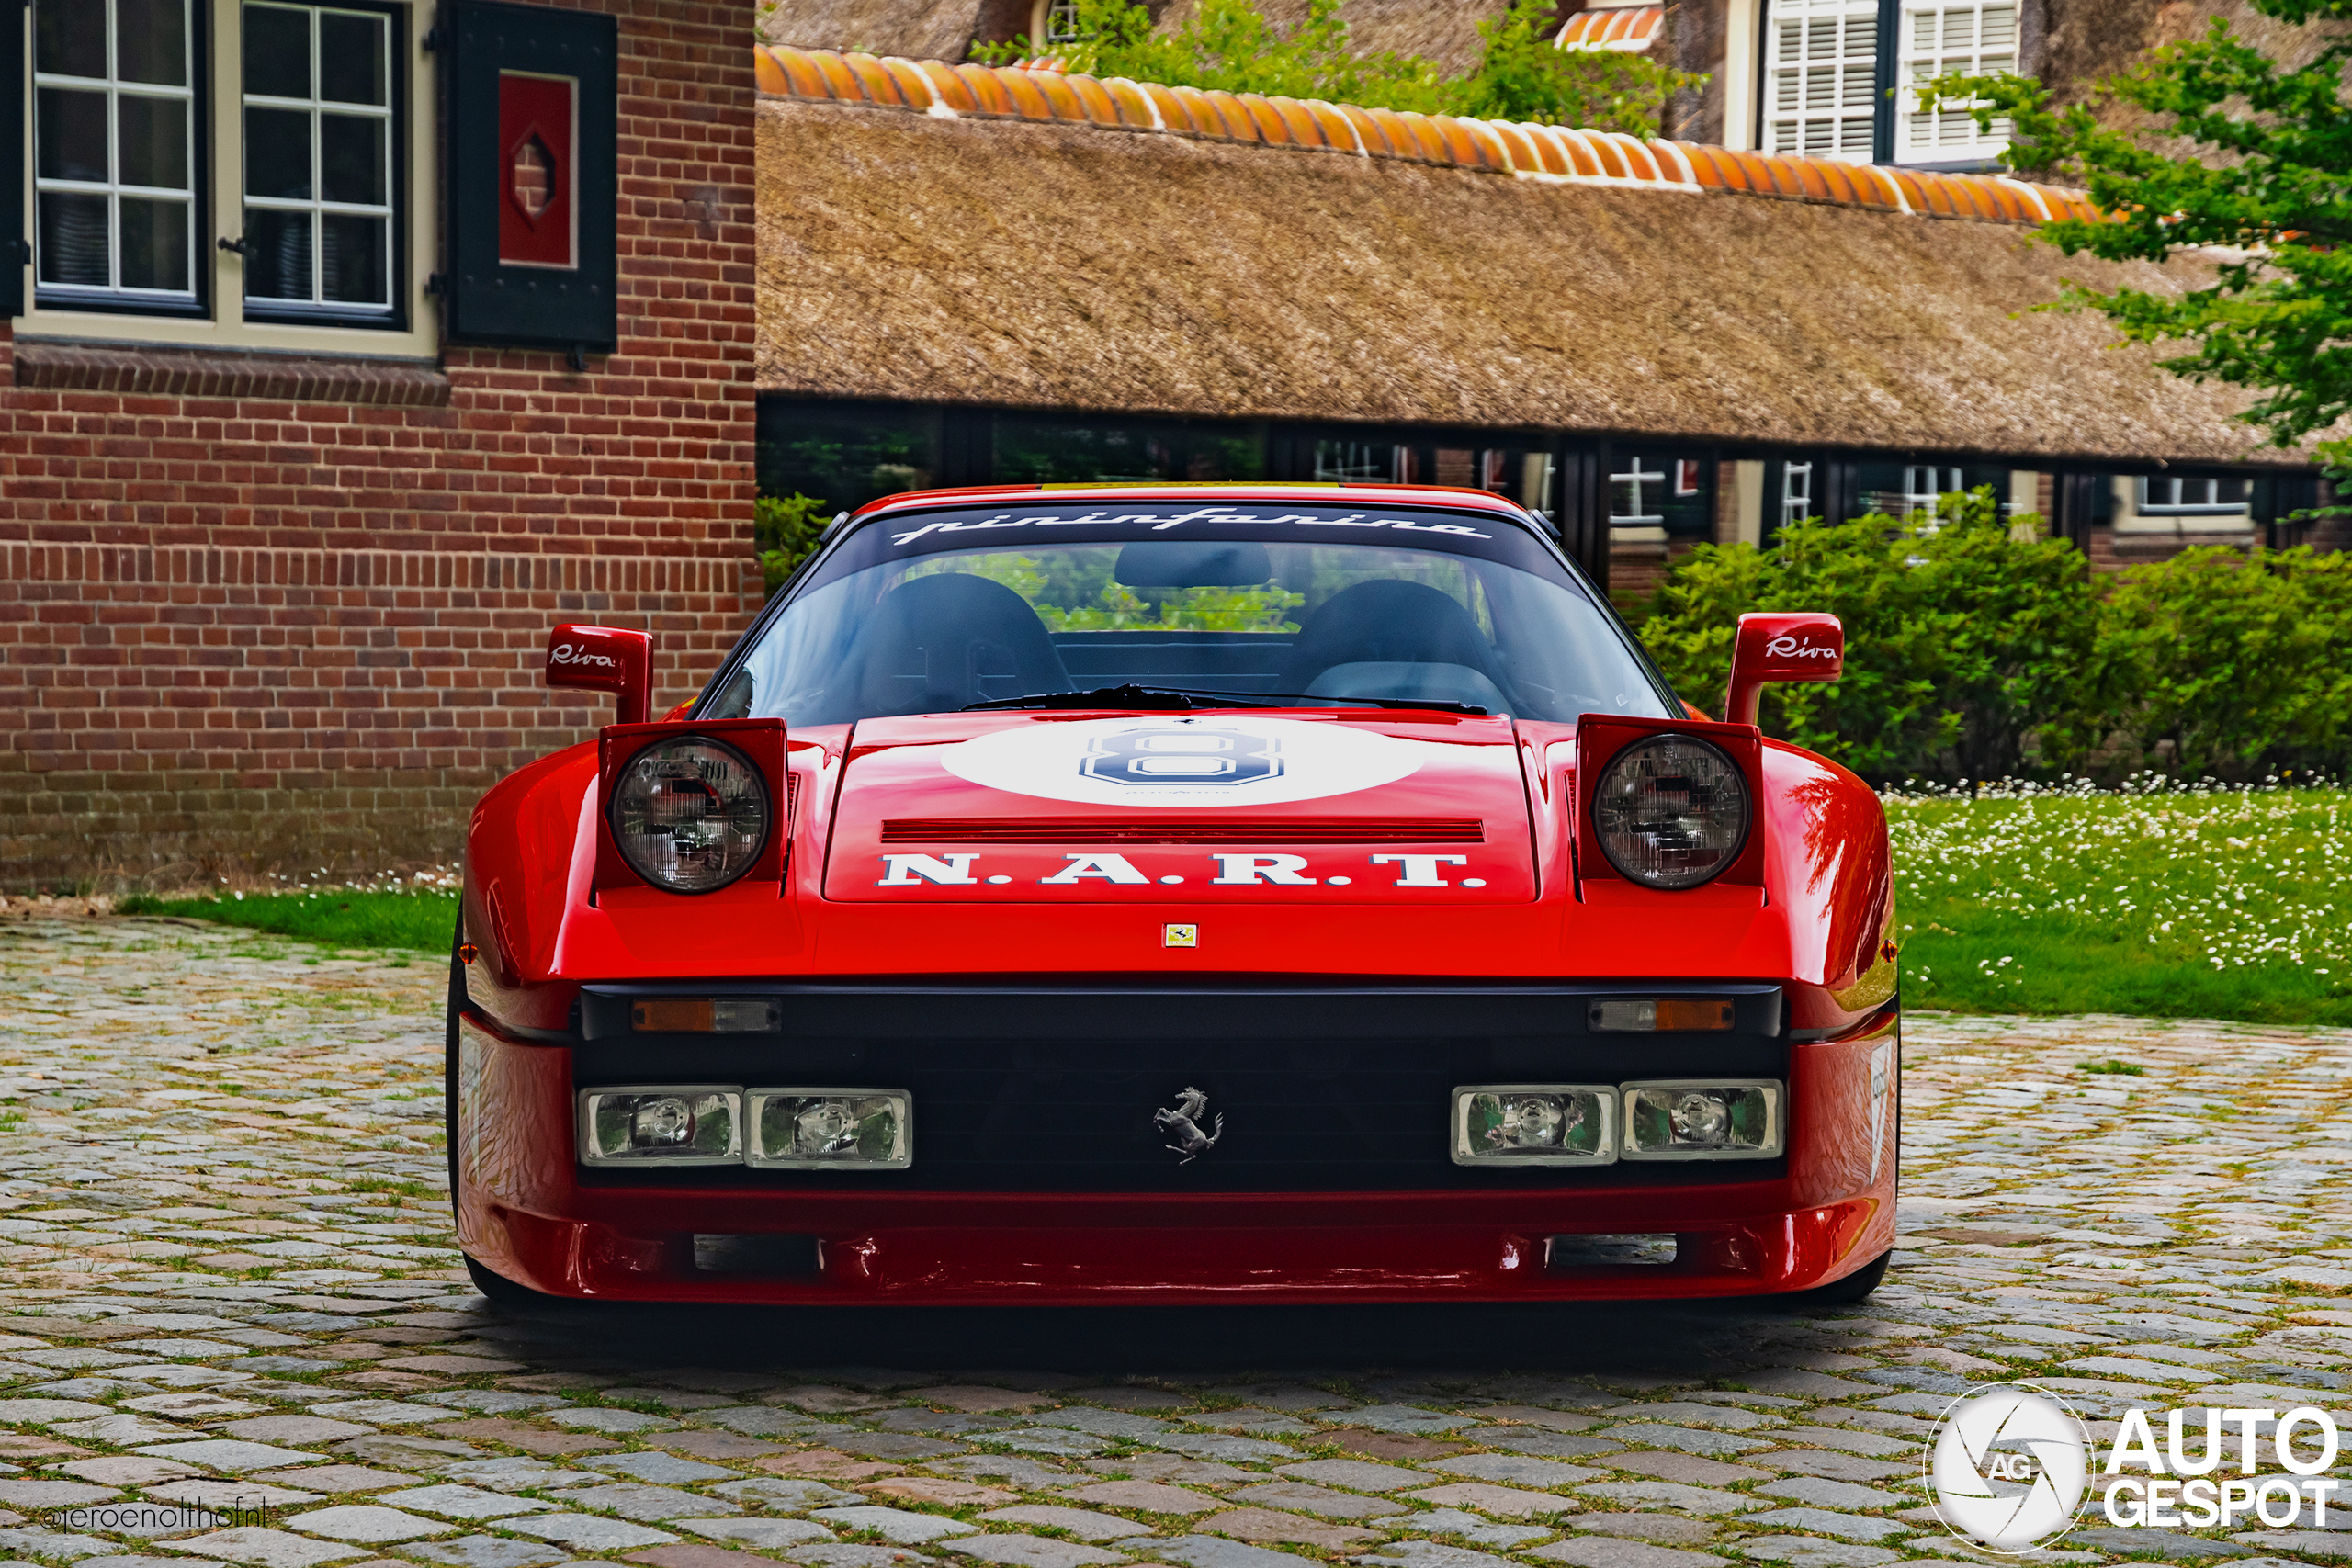 The Ferrari 288 GTO Recreation by Jim Carpenter